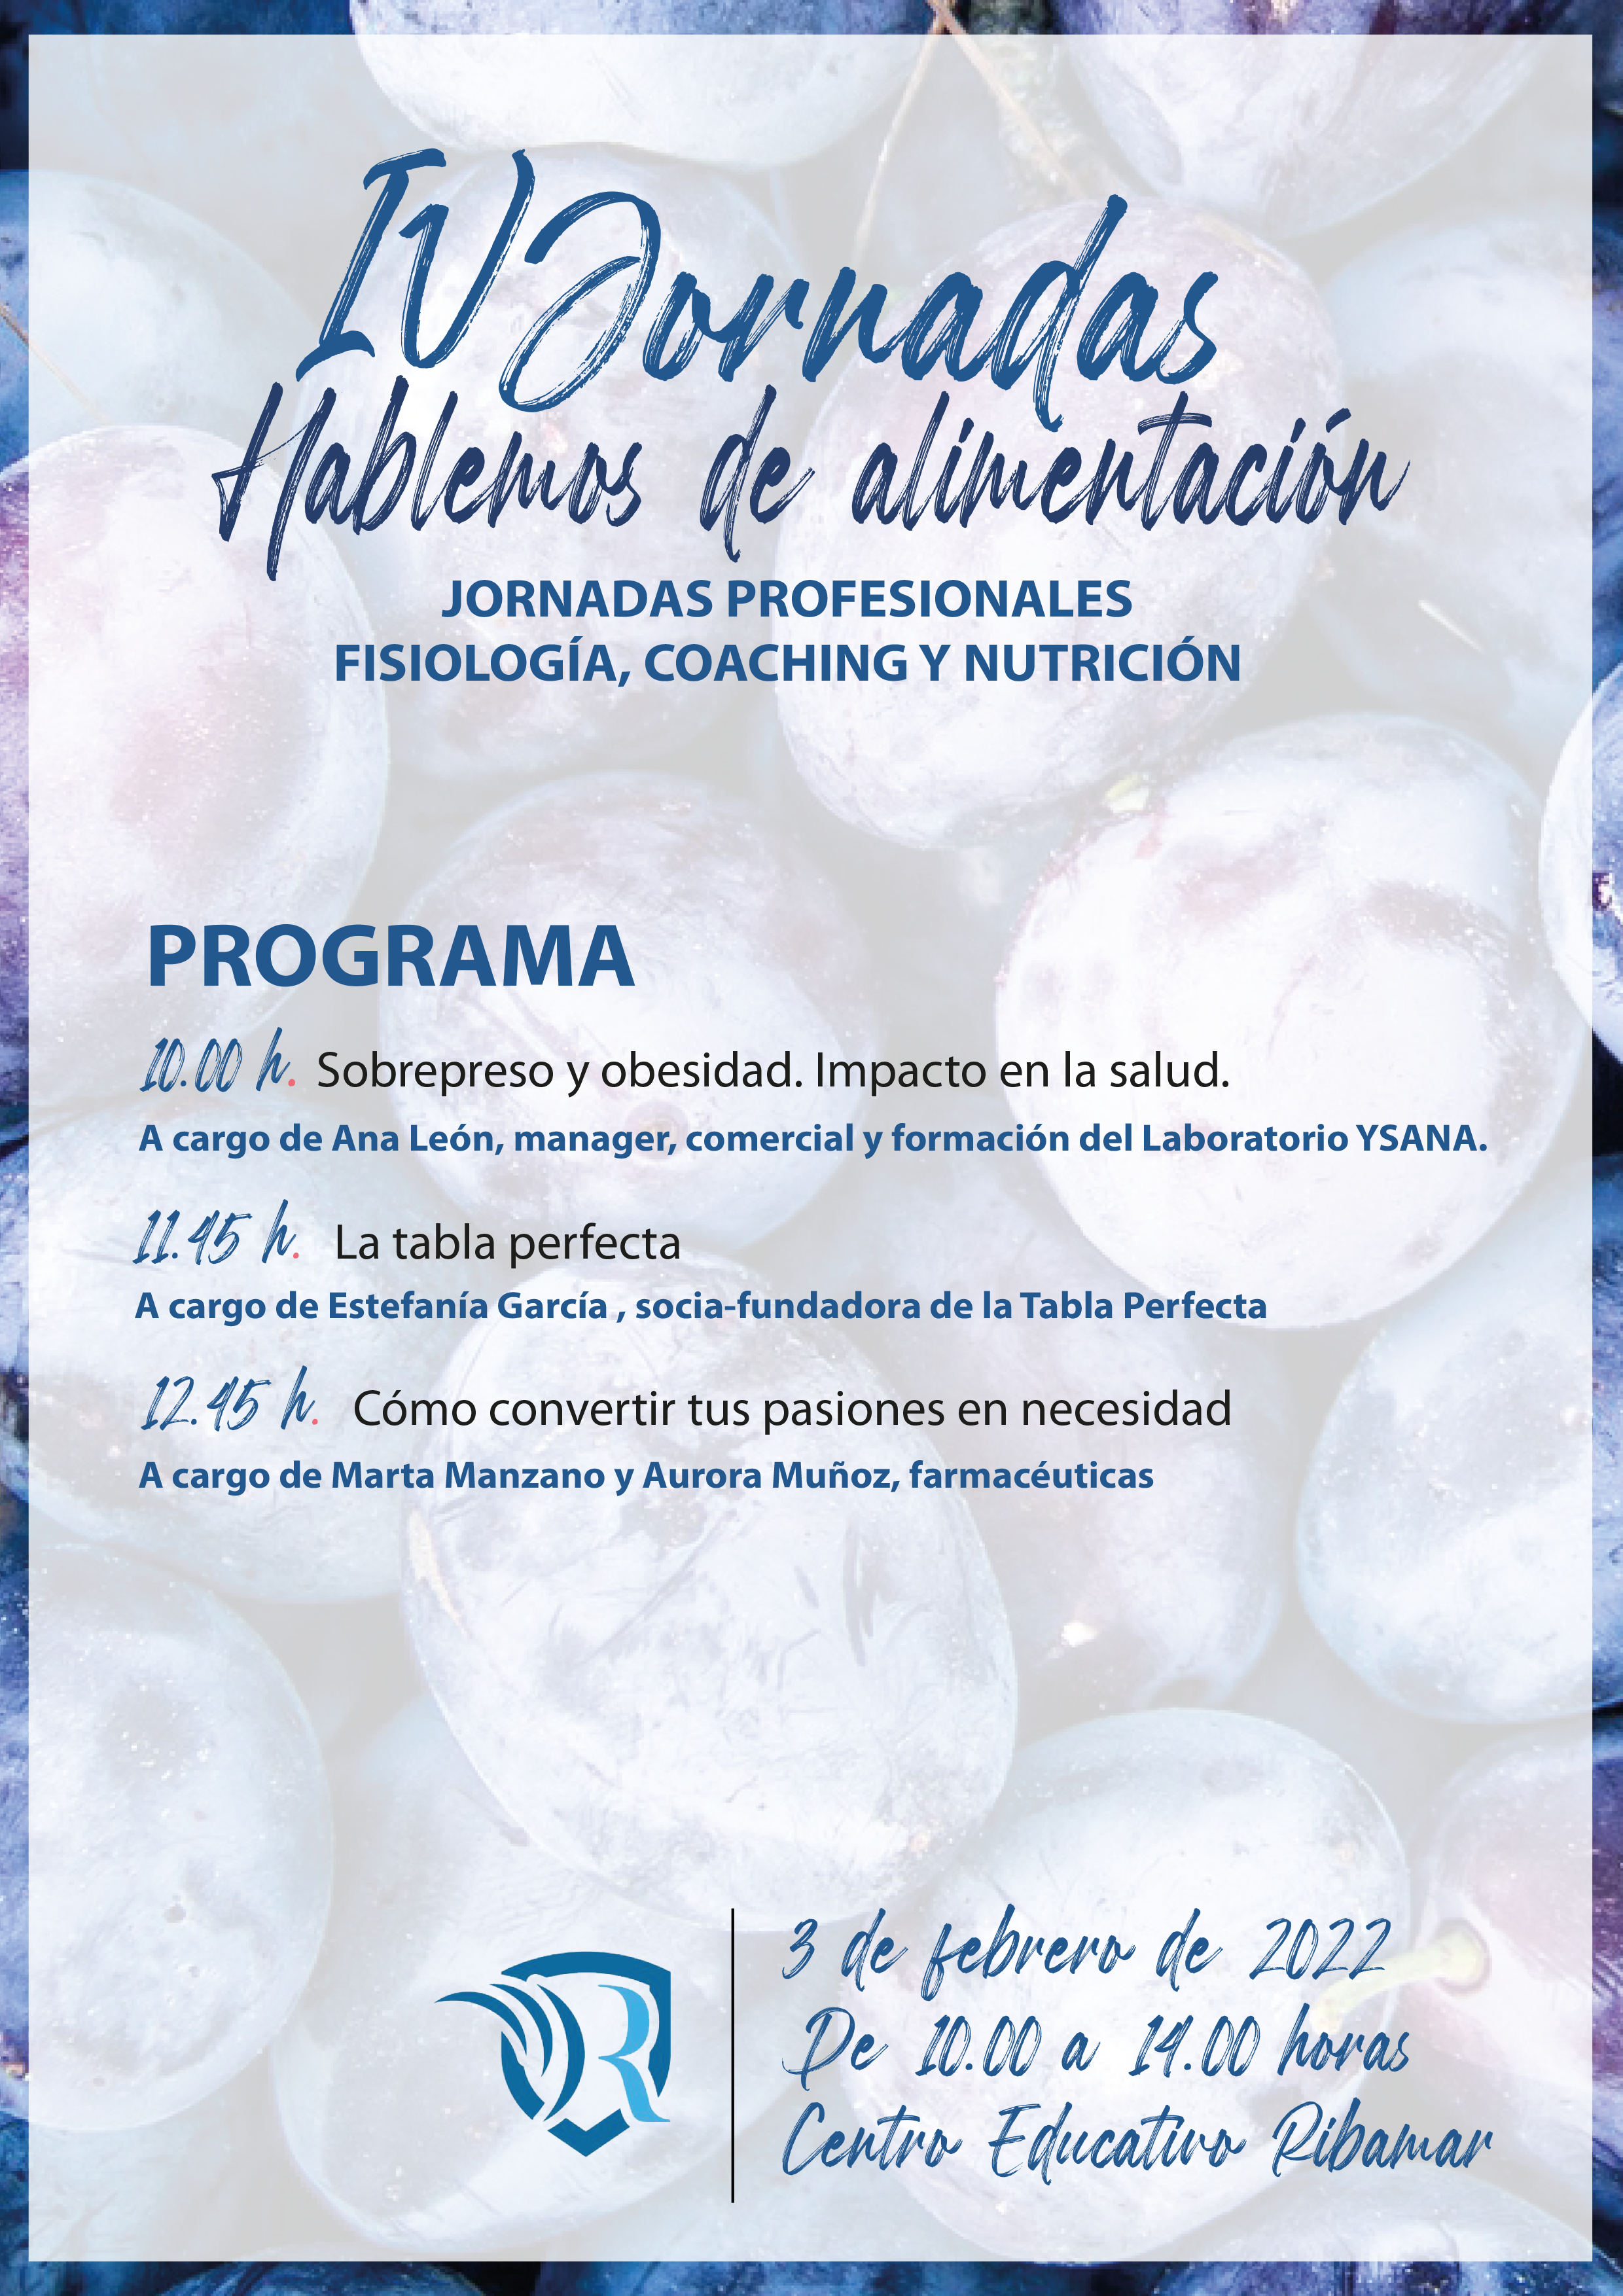 cartel-iv-jornadas-dietetica-Ribamar-21-coach-nutricional-sevilla-fp-oportunidades